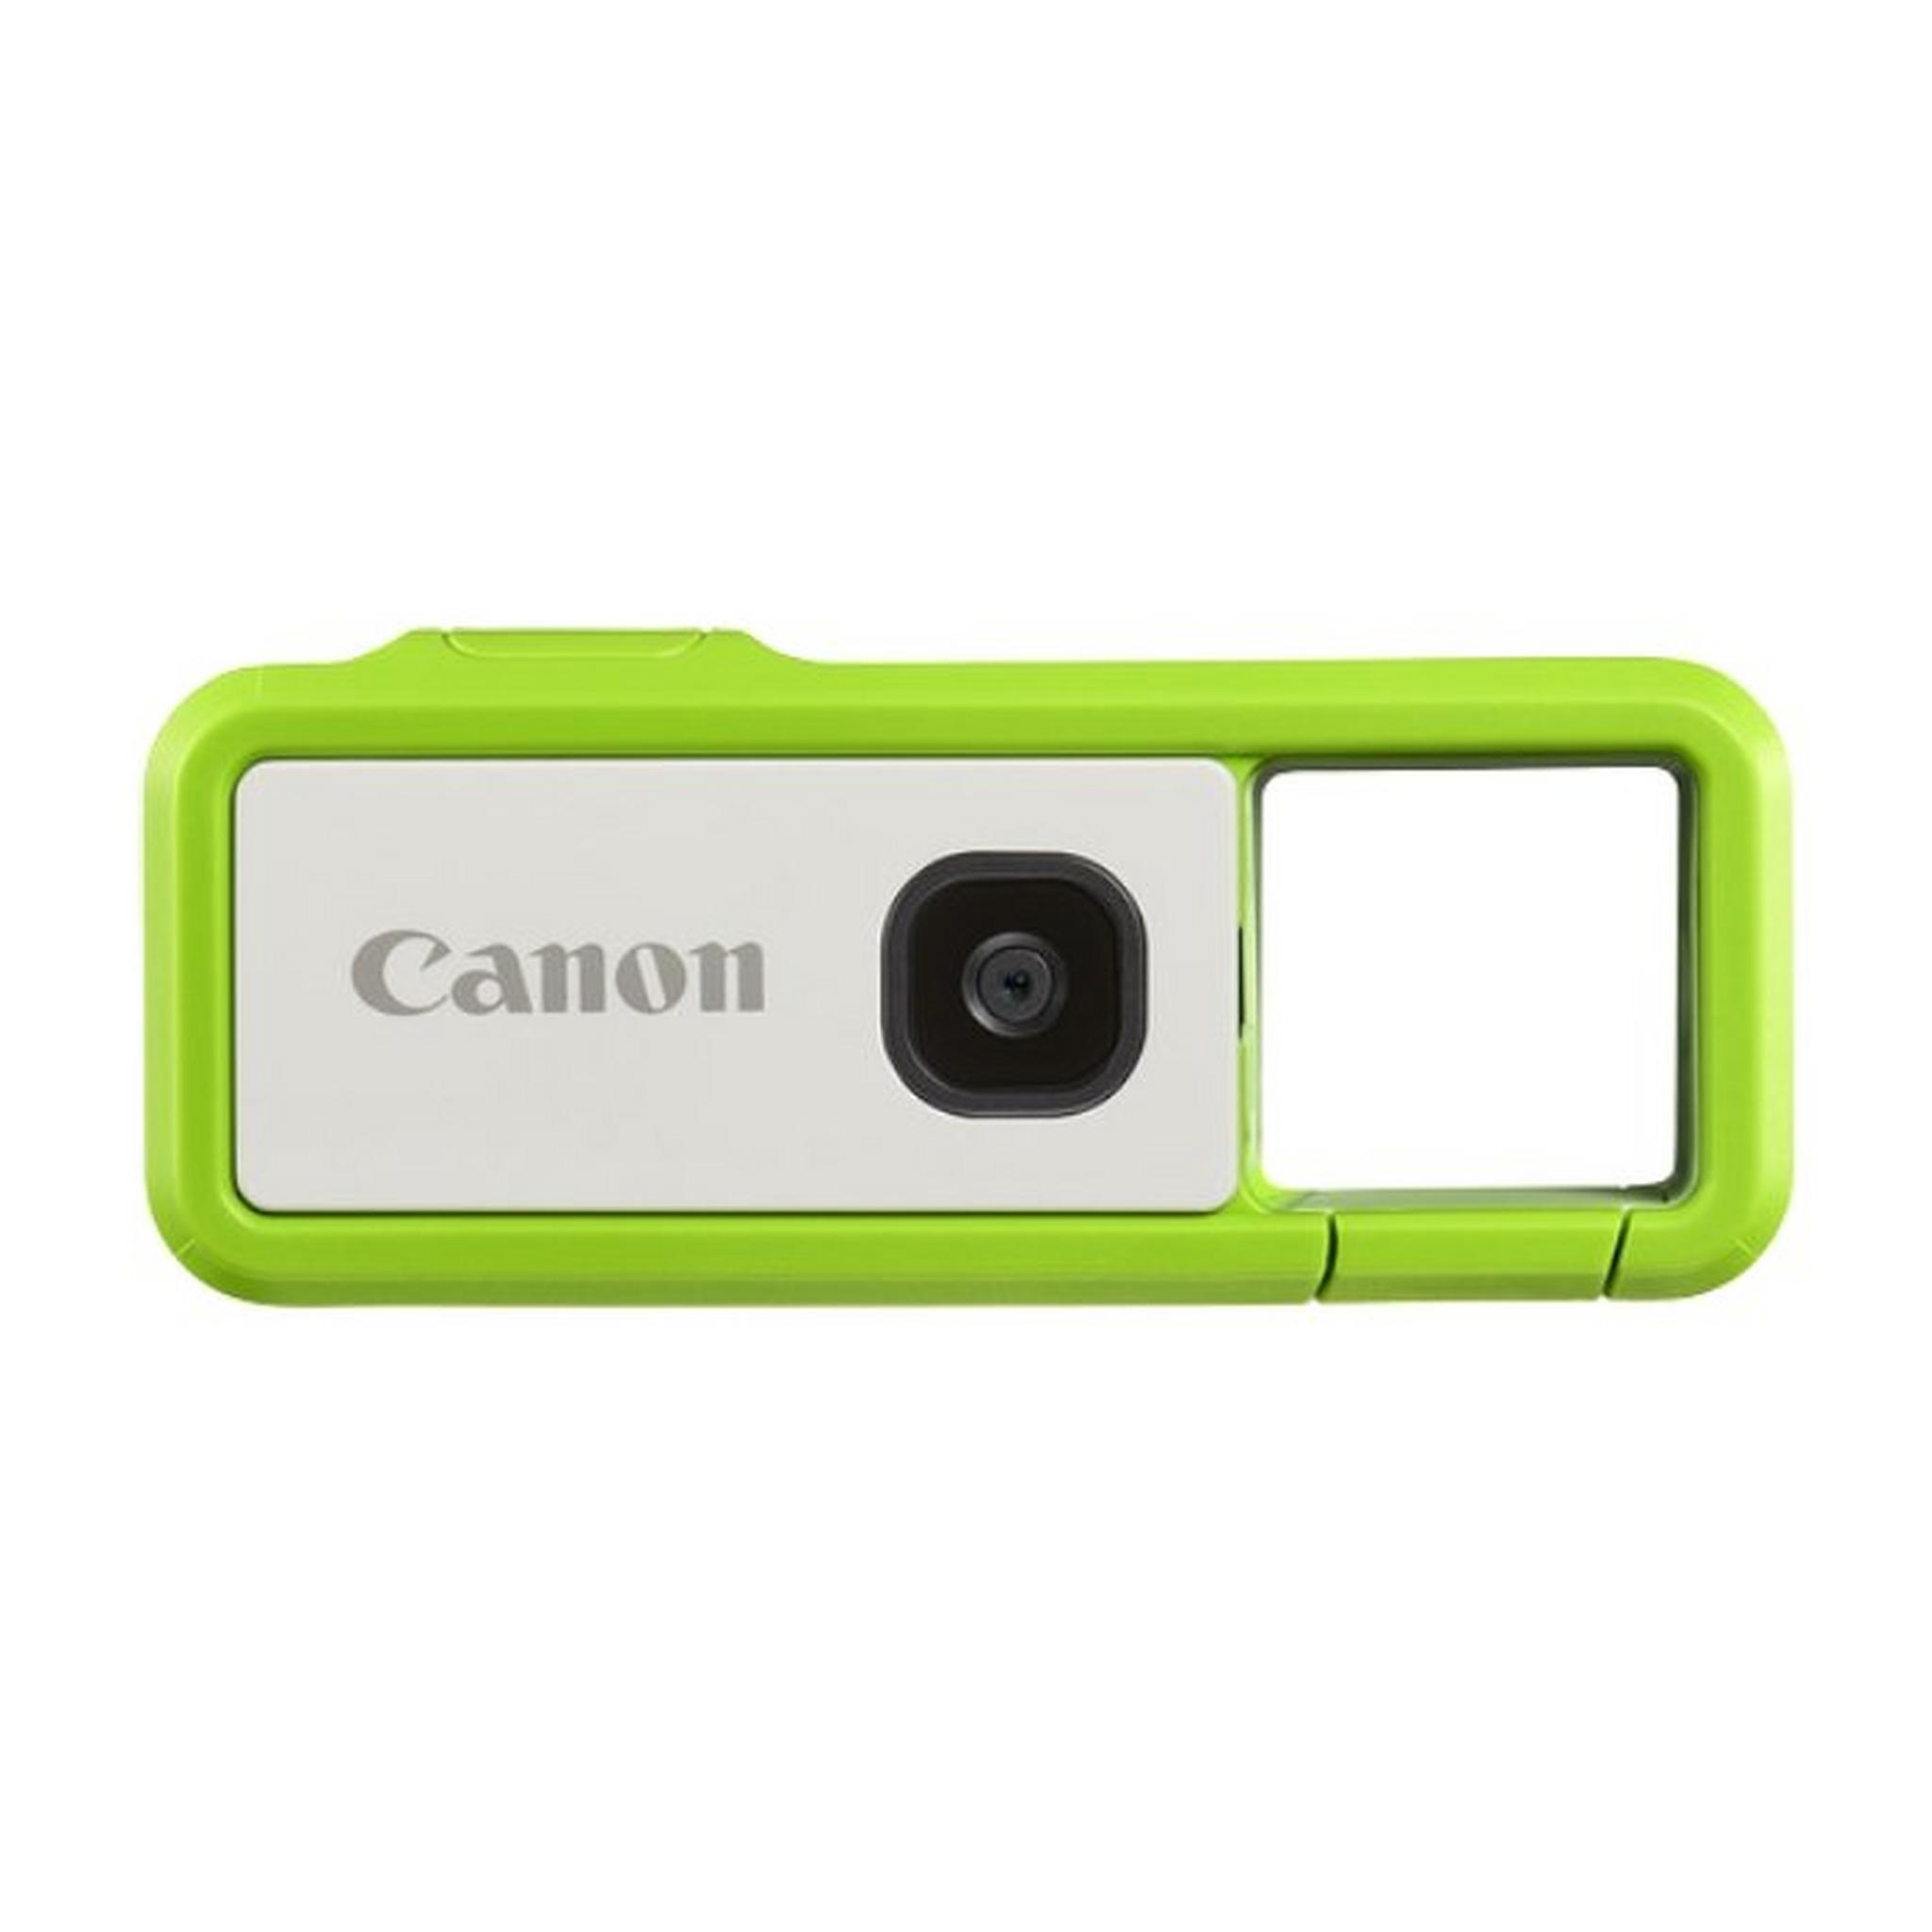 Canon IVY REC Digital Camera - Avocado